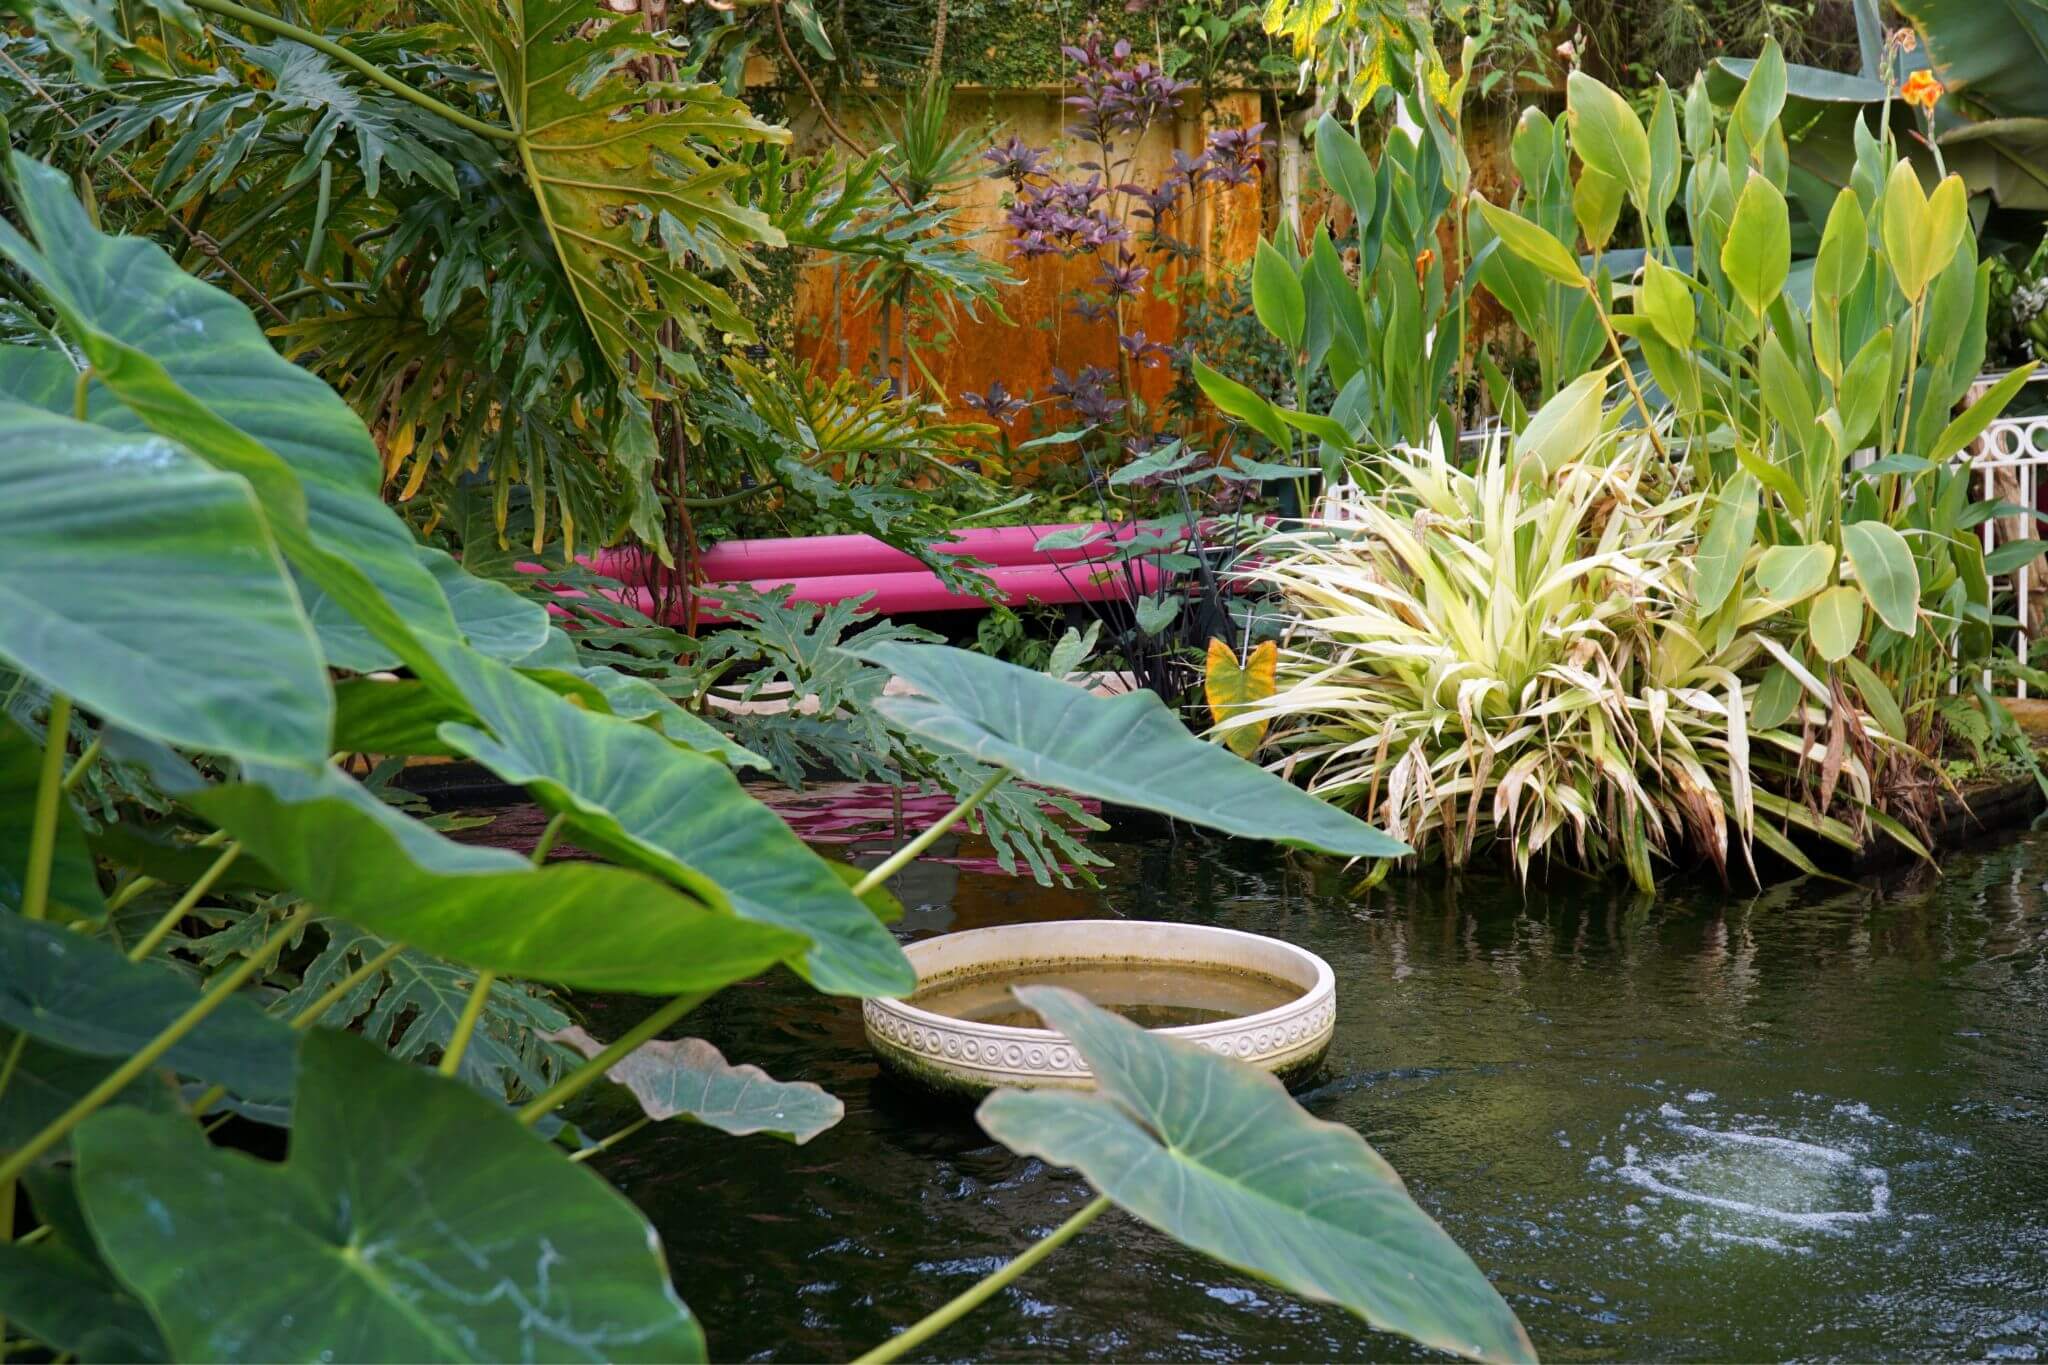 Tropical House Pond at Birmingham Botanical Gardens